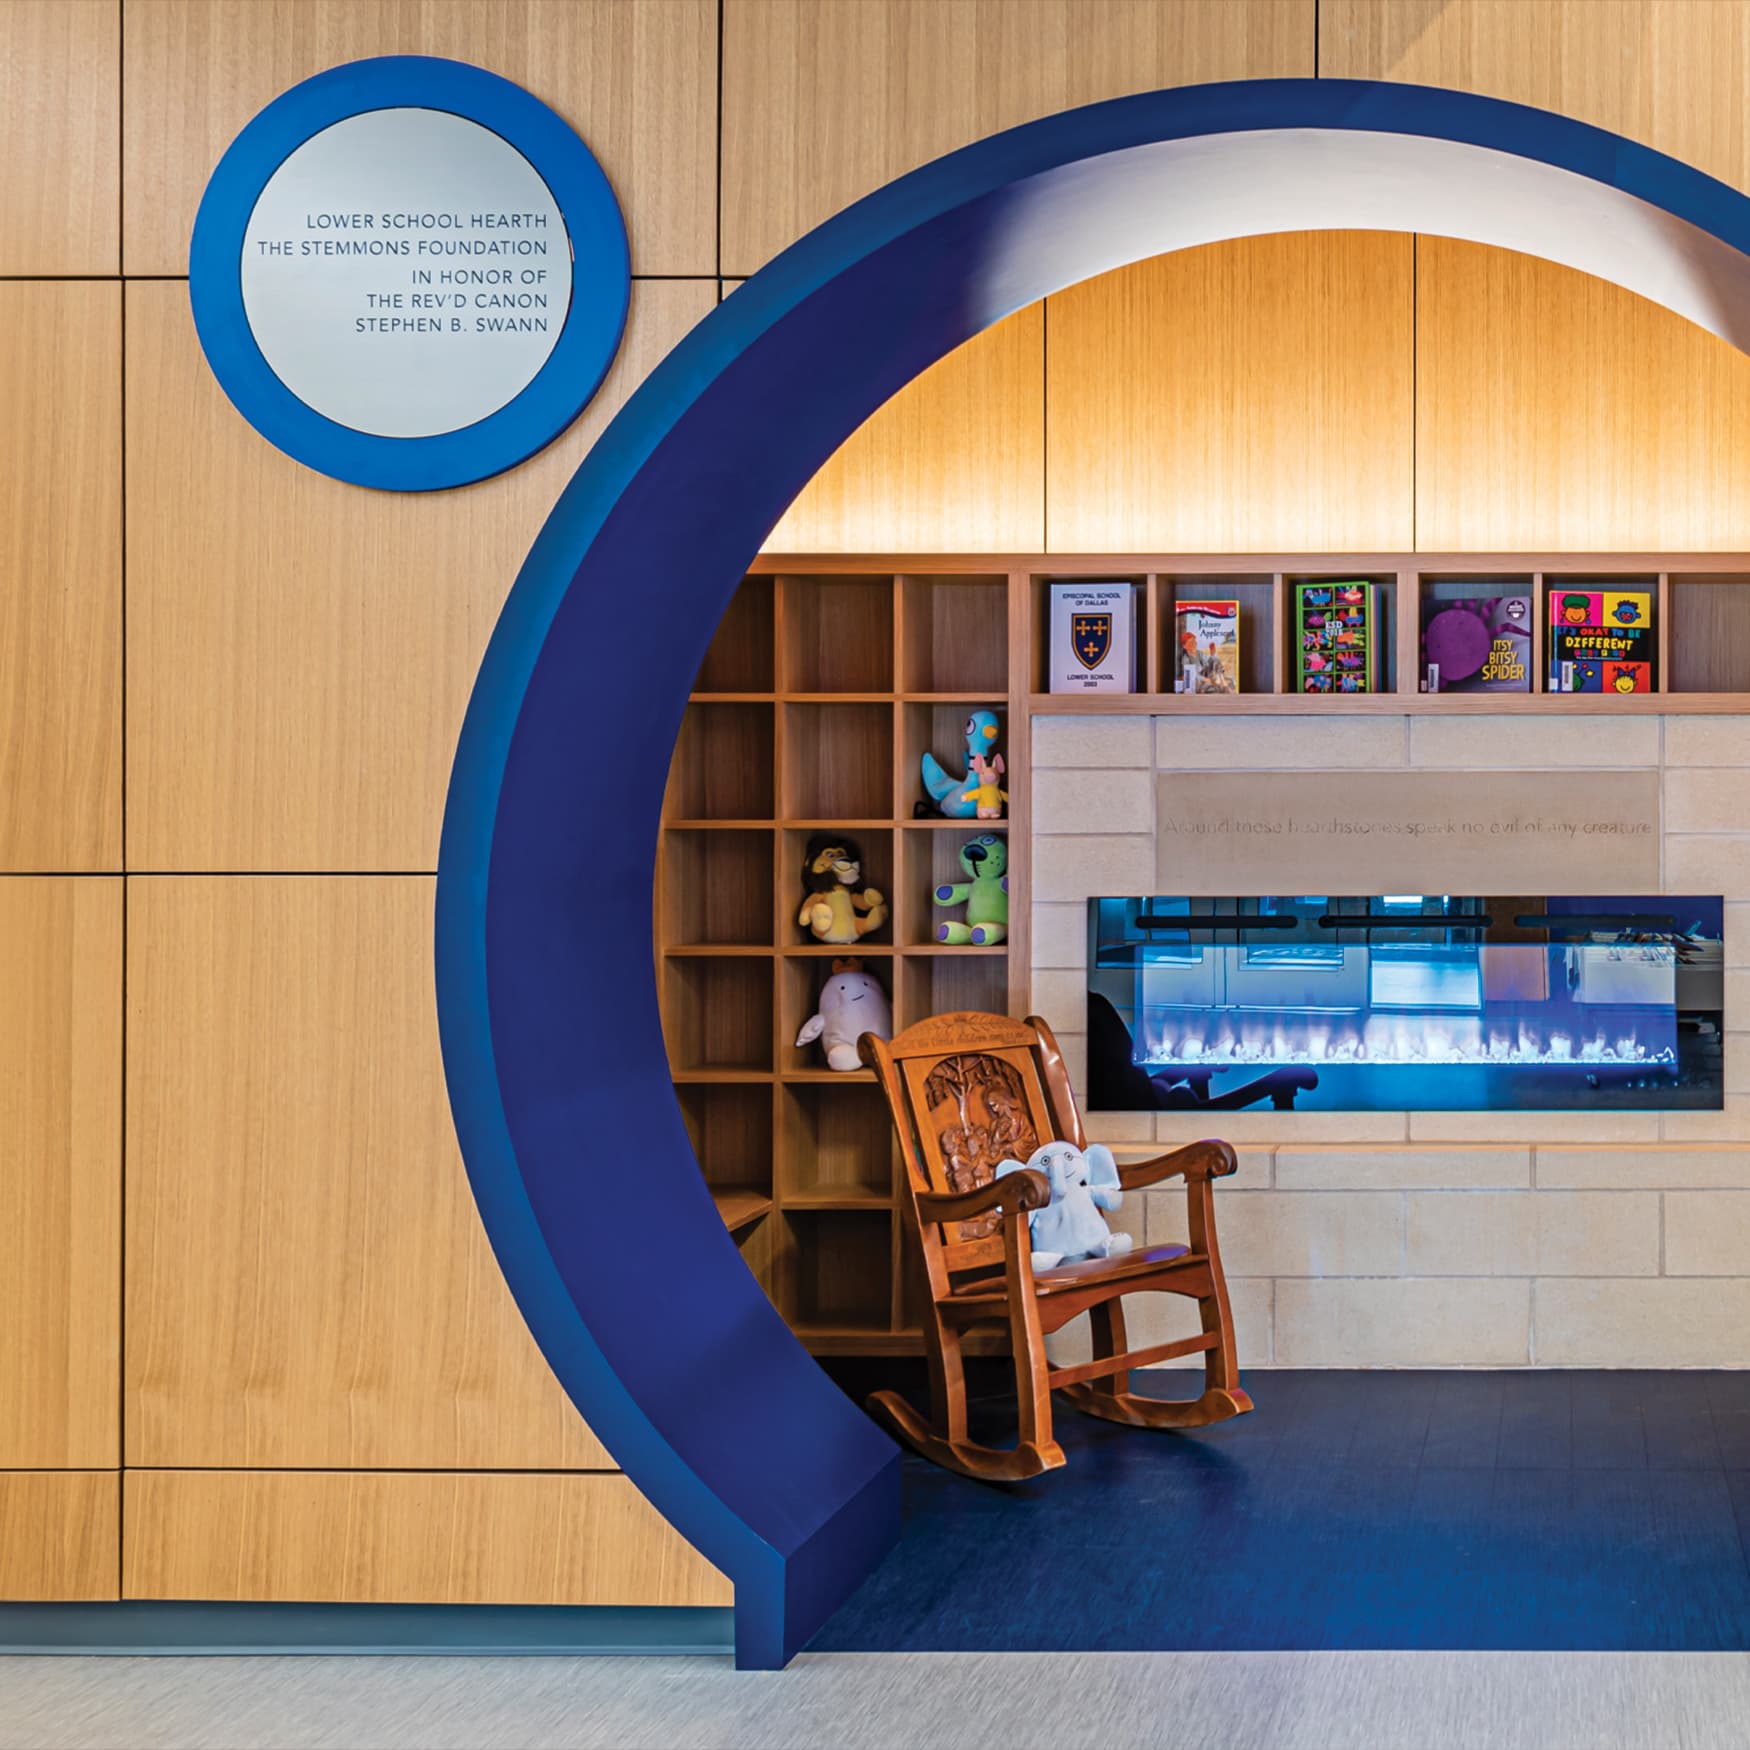 Children's medical center signage and interior design details